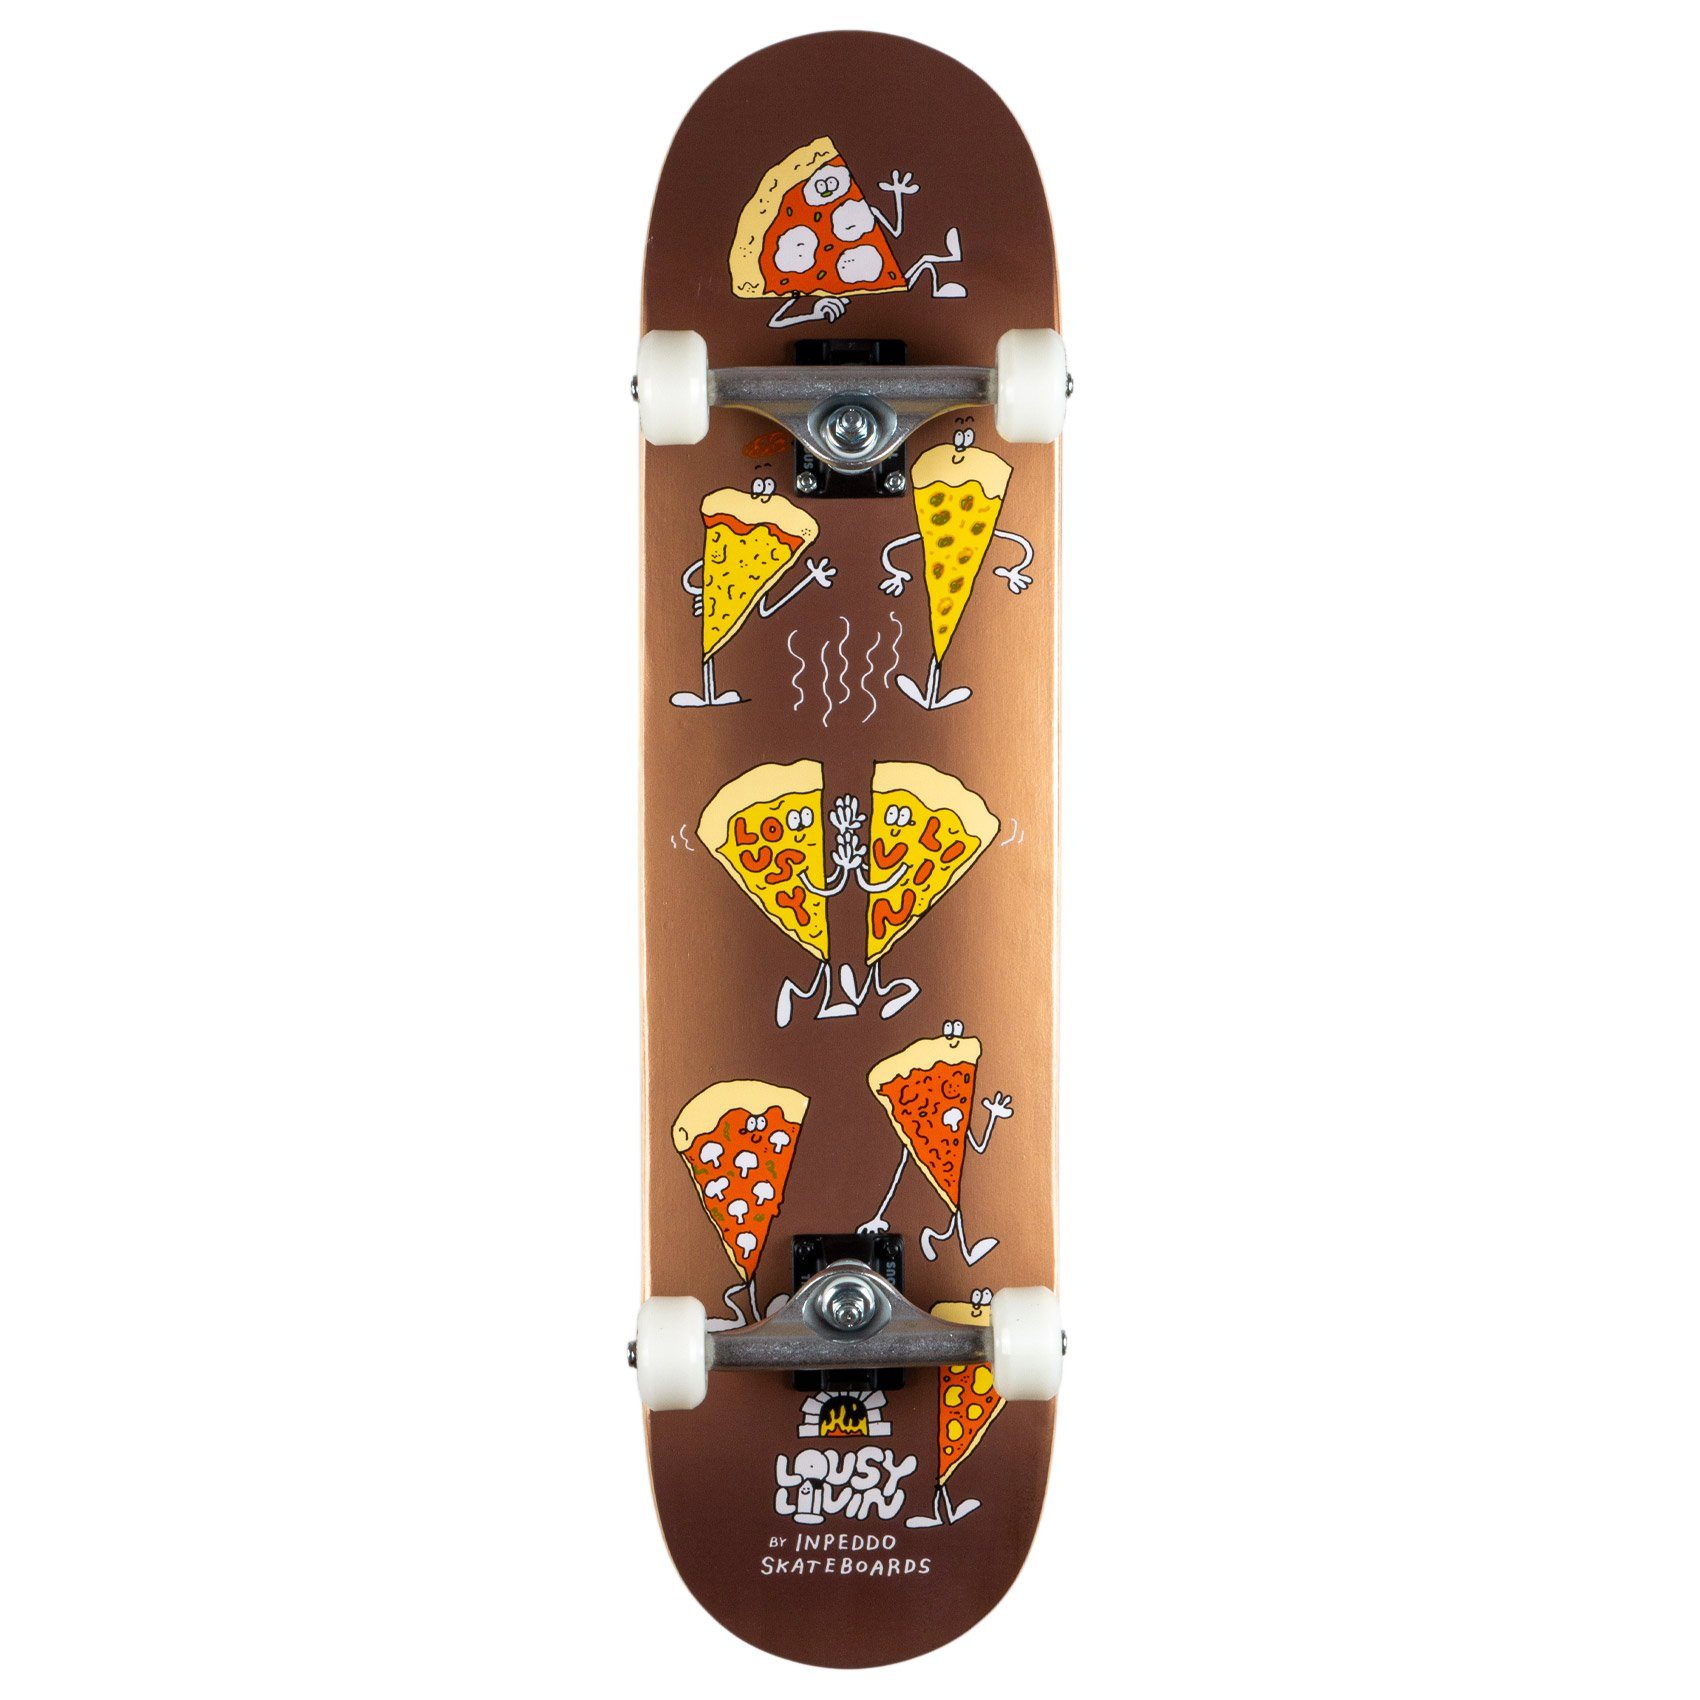 Inpeddo Skateboard x Lousy 7.75' multi Livin Pizza 